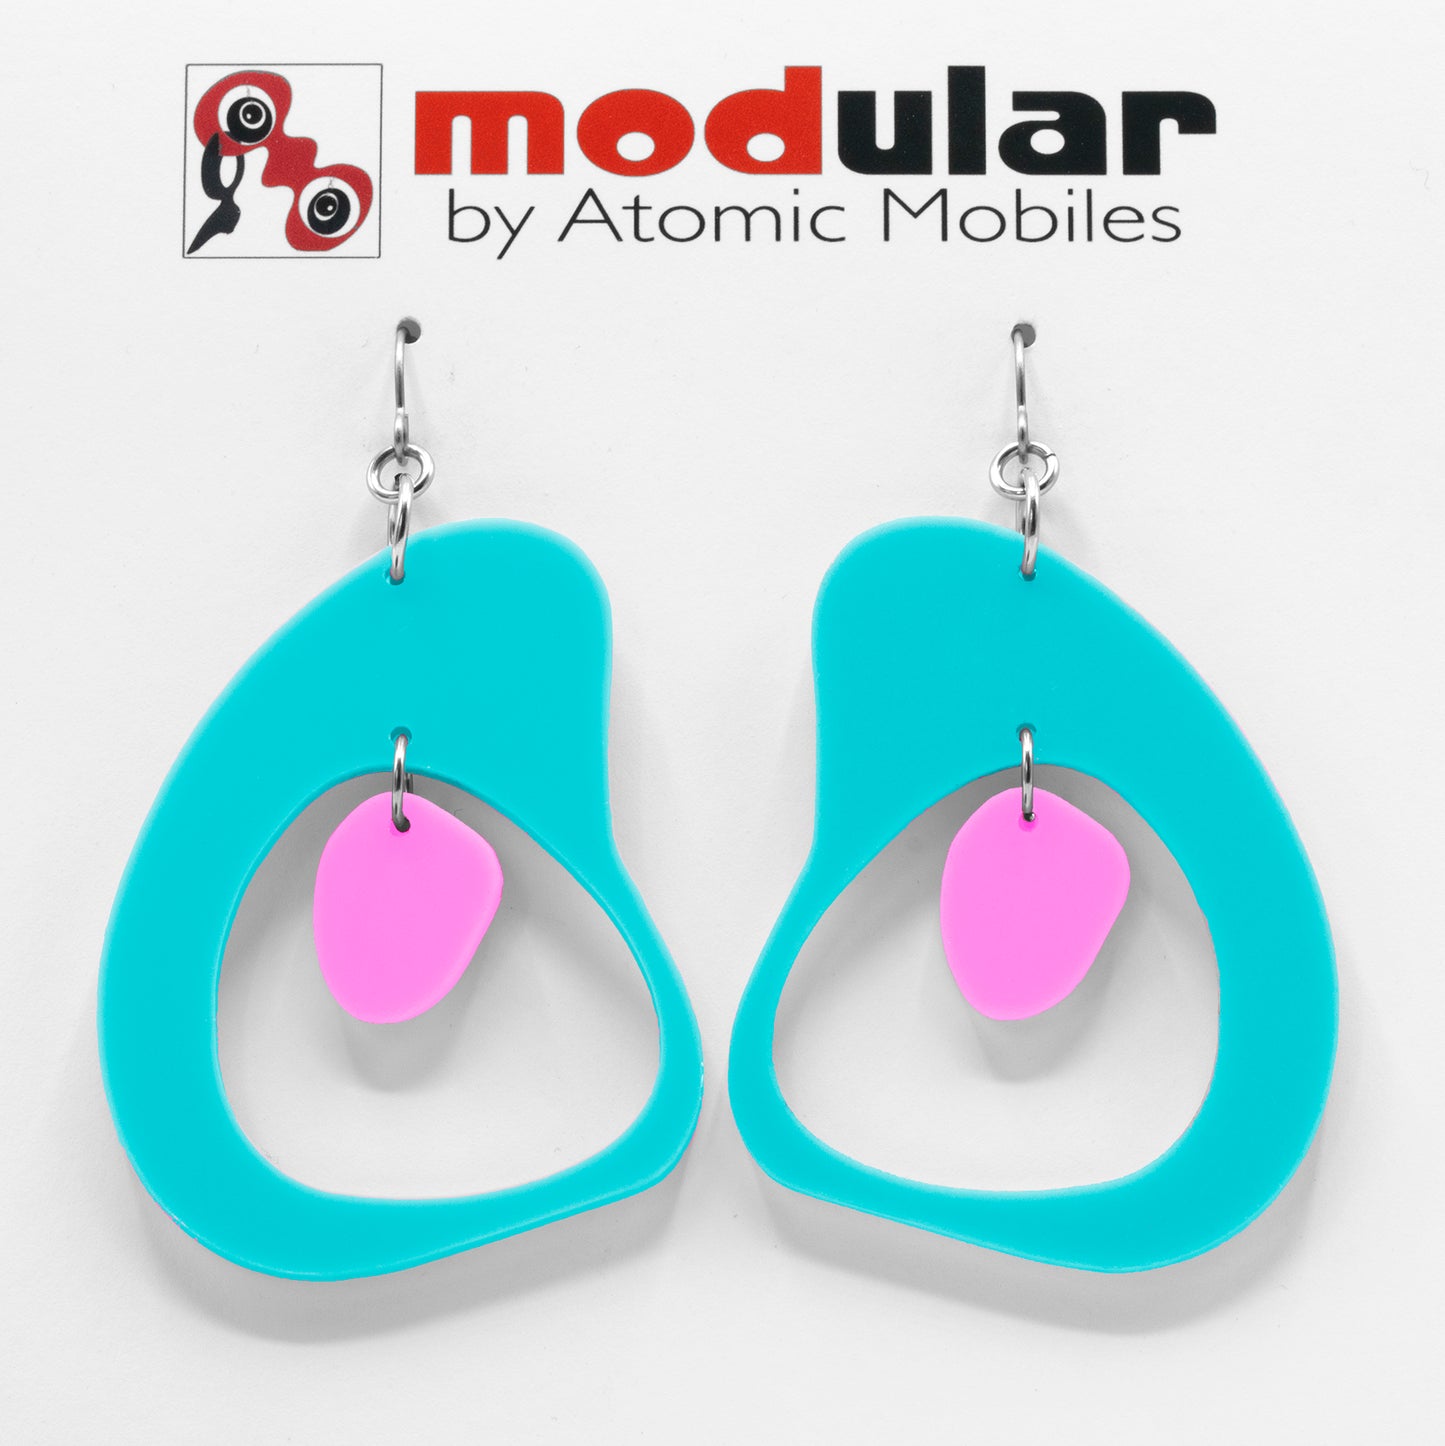 MODular Earrings - Boomerang Statement Earrings in Aqua and Hot Pink by AtomicMobiles.com - retro era inspired mod handmade jewelry